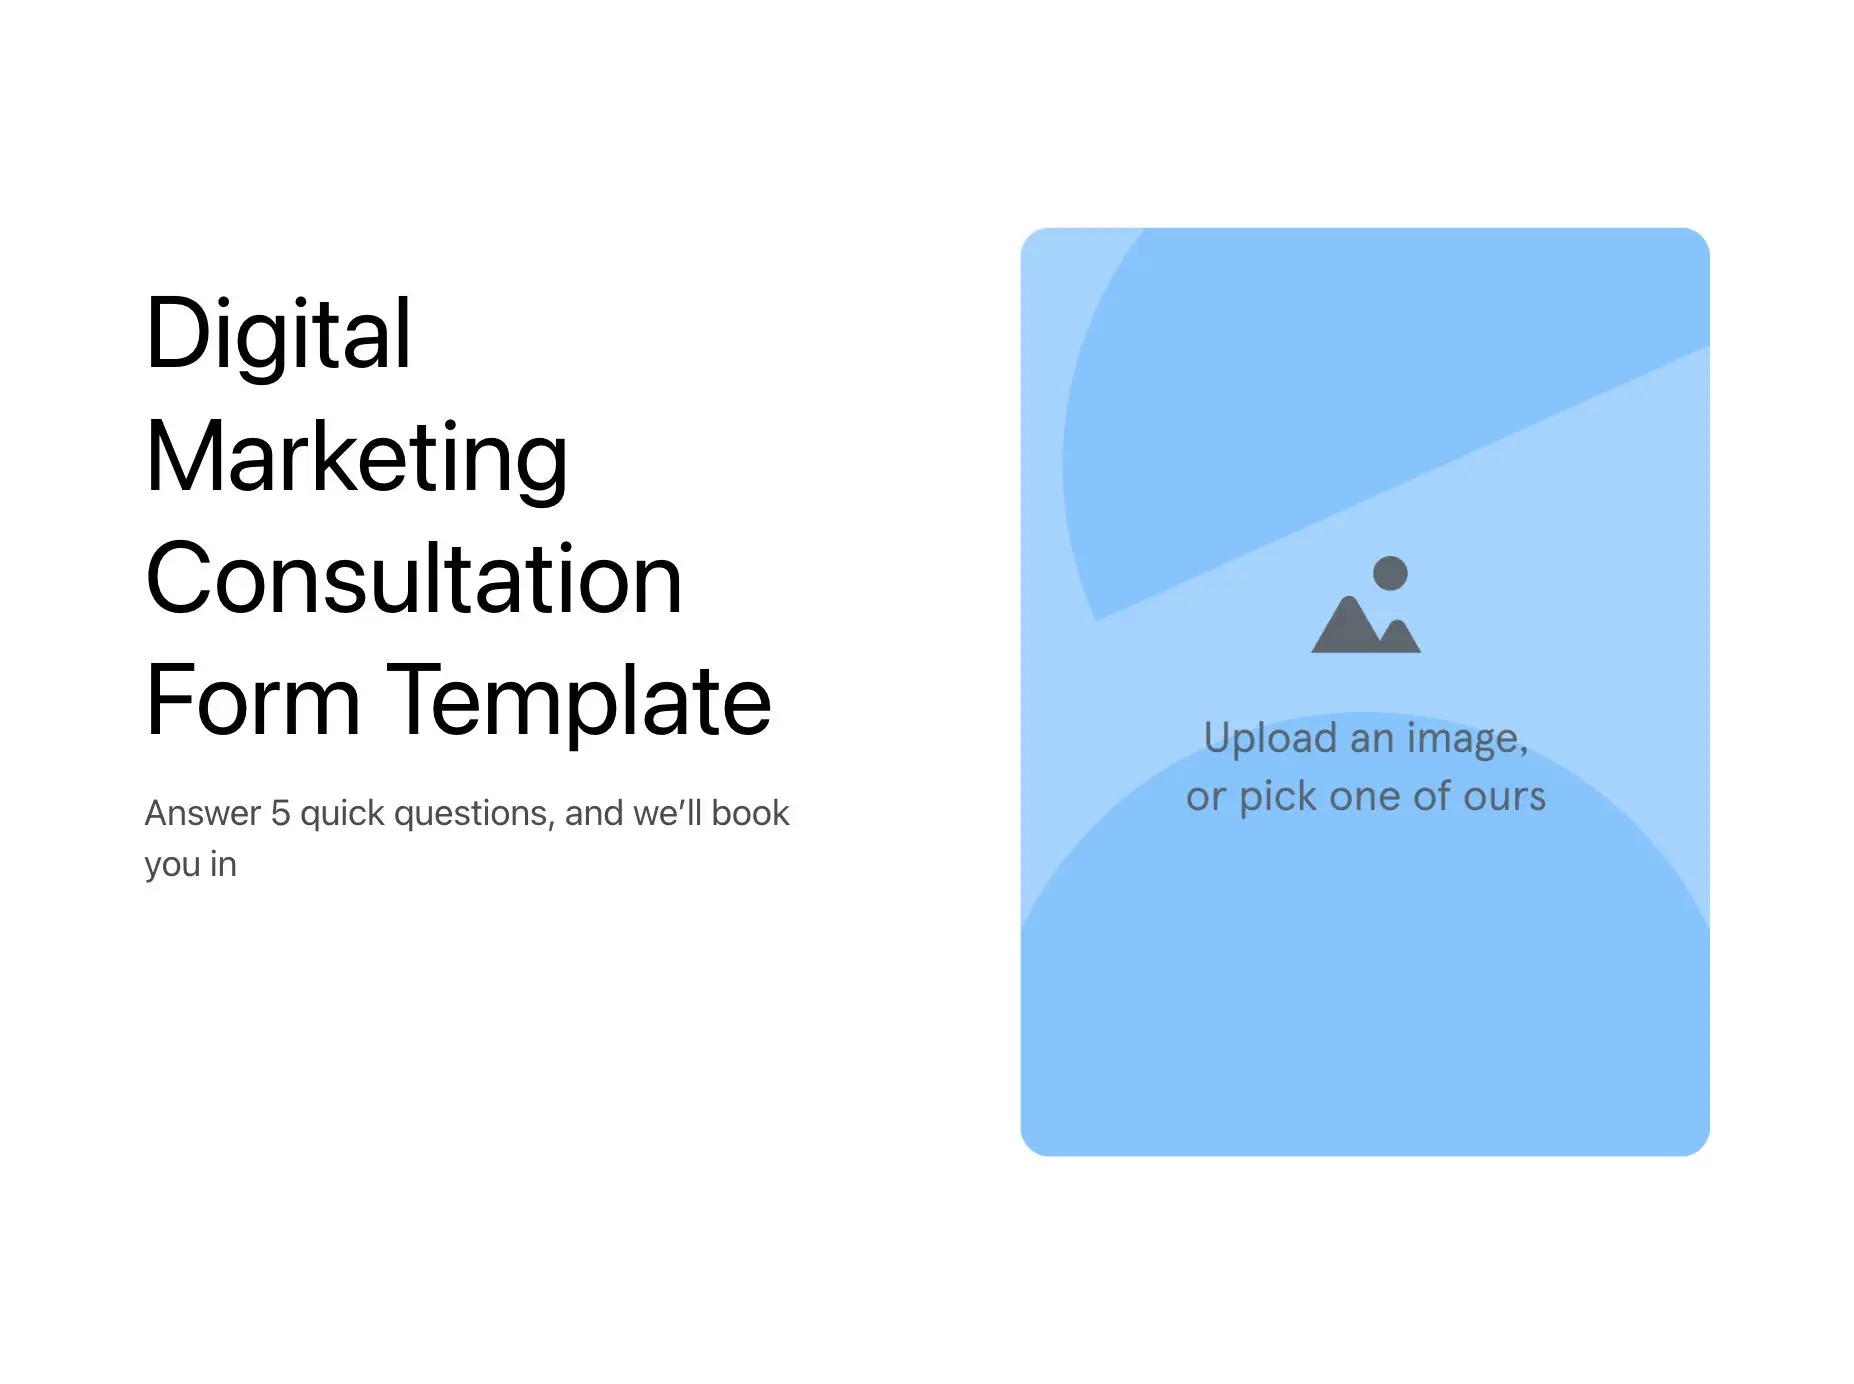 Digital Marketing Consultation Form Template Hero